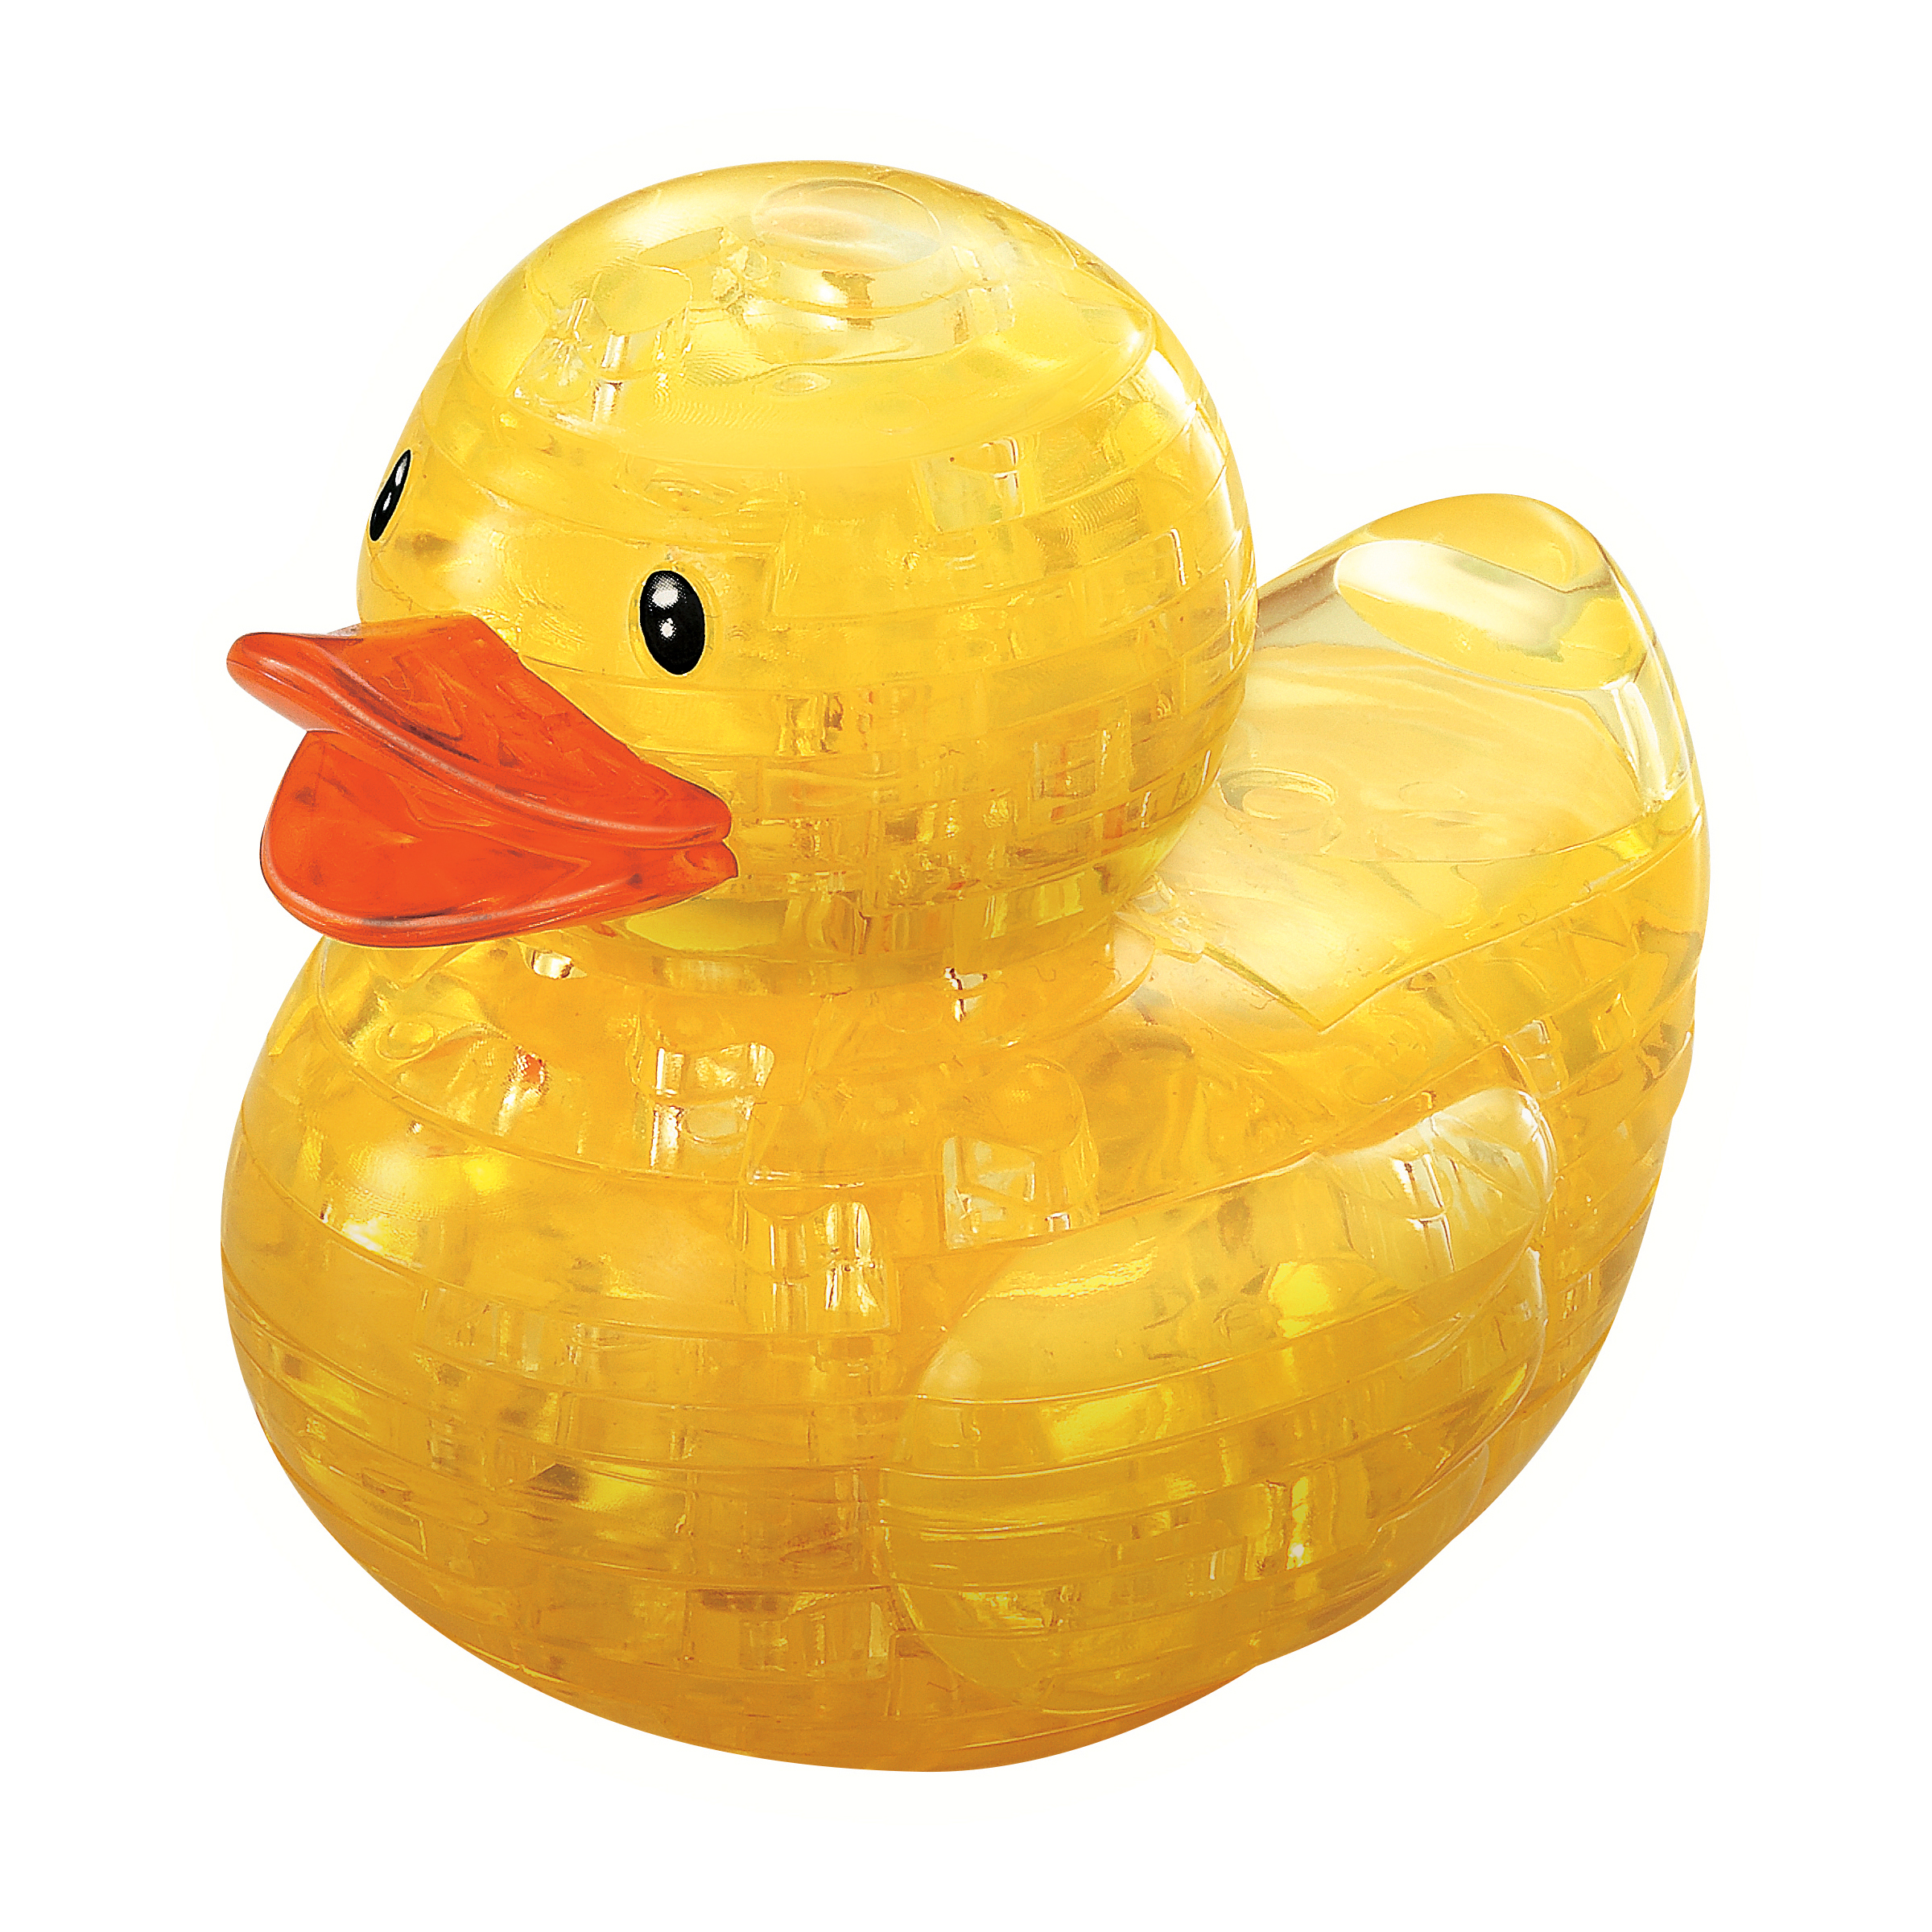 Bepuzzled 3D Crystal Puzzle - Rubber Duck: 43 Pcs